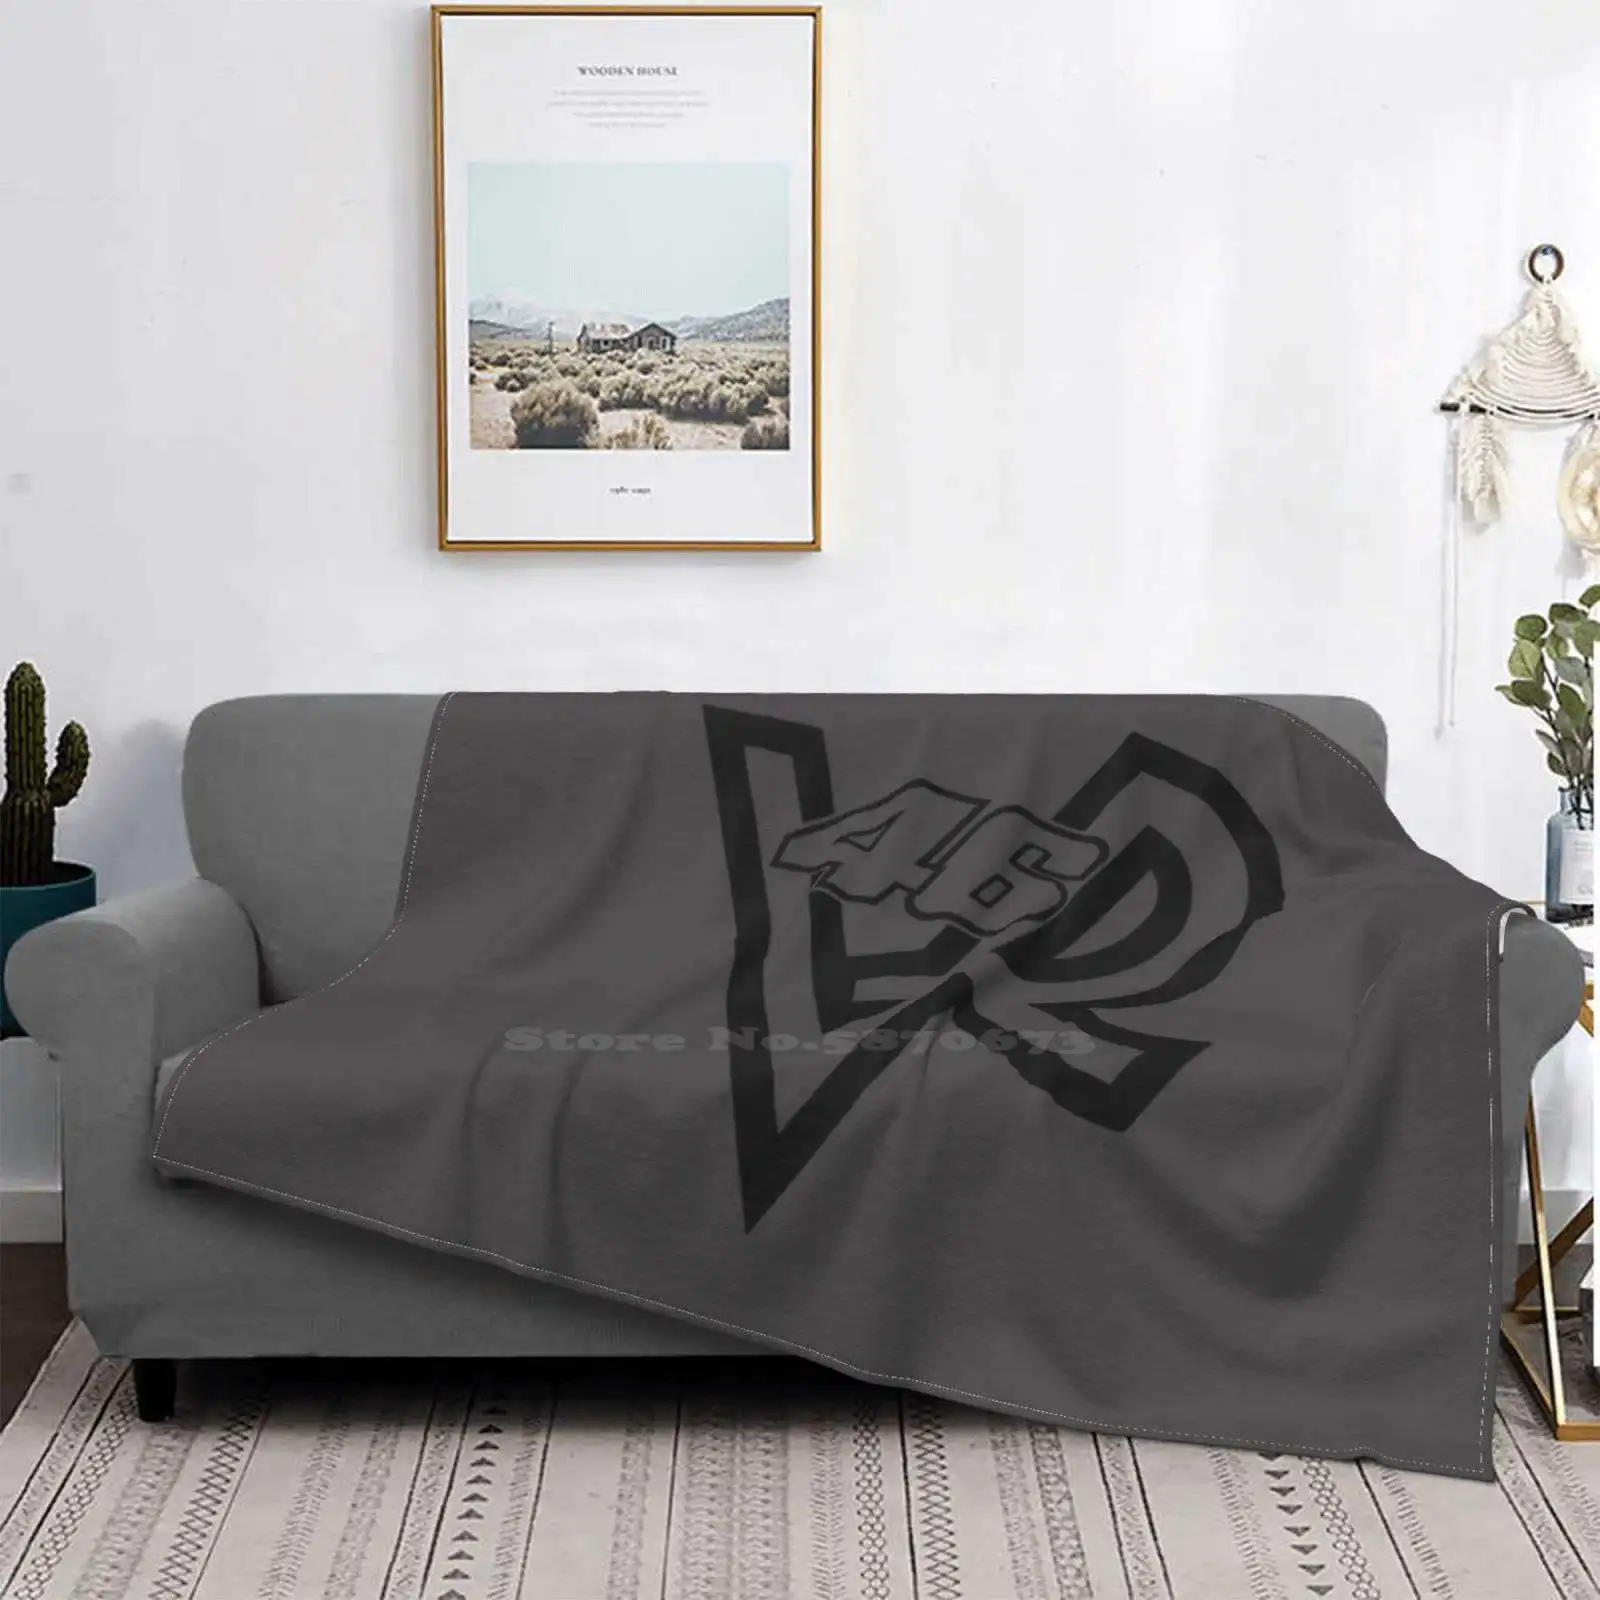 

Хит продаж, комнатное домашнее фланелевое одеяло, Гоночное одеяло, модель 4, 6, с логотипом гоночного велосипеда Gp, мотоцикла Marquez